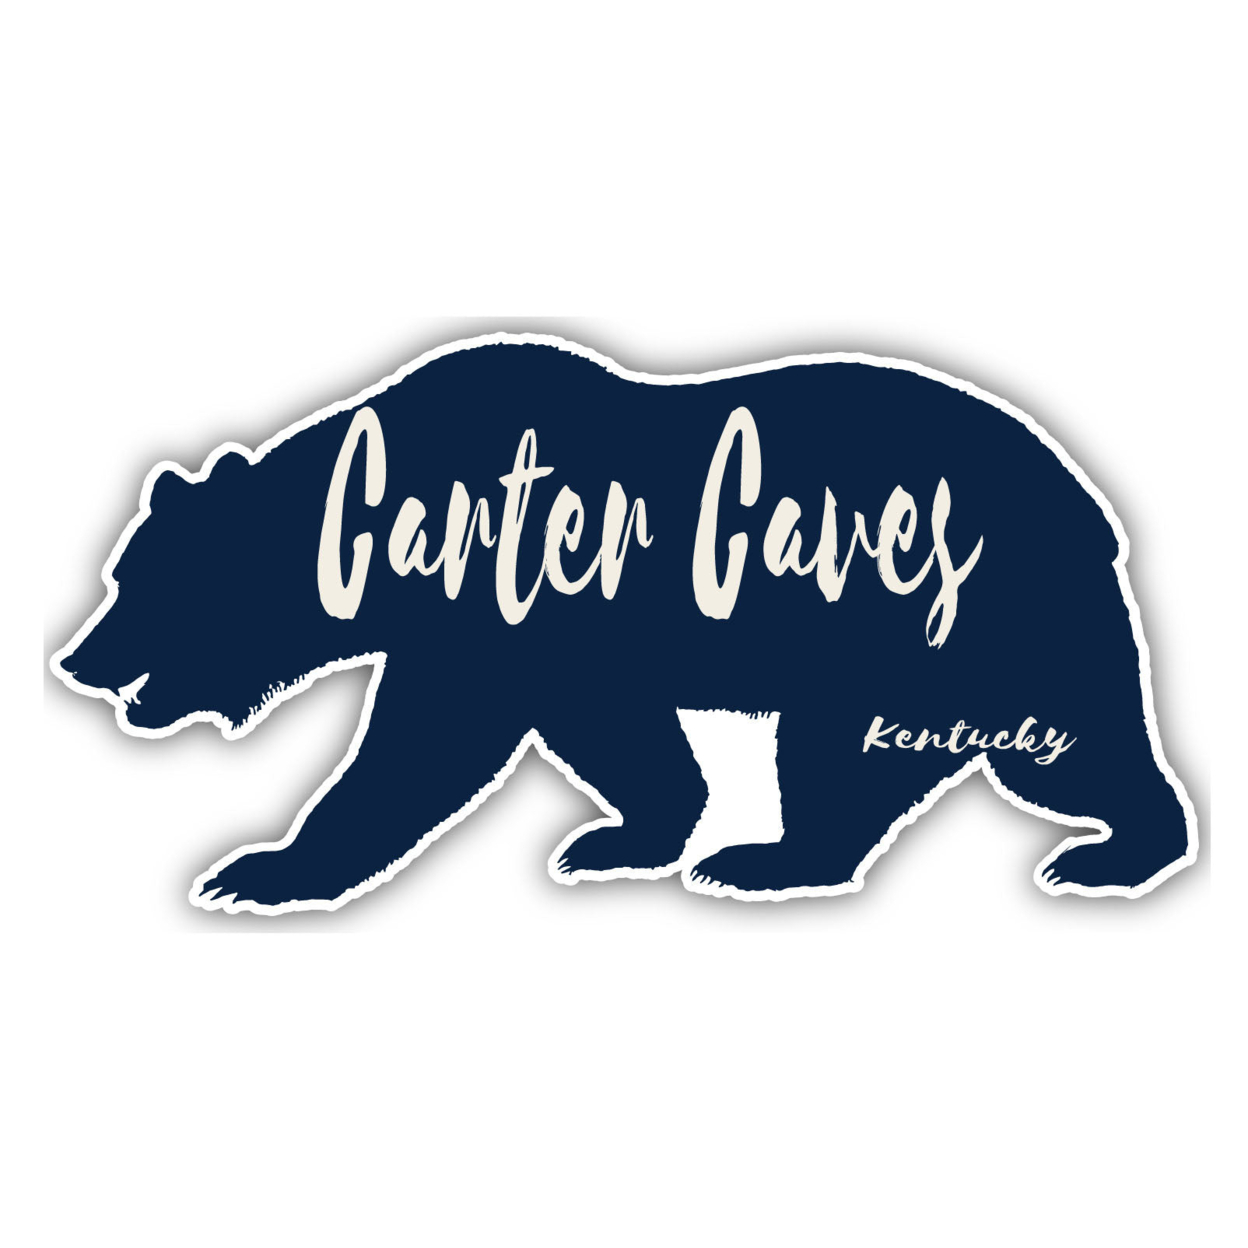 Carter Caves Kentucky Souvenir Decorative Stickers (Choose Theme And Size) - Single Unit, 4-Inch, Bear